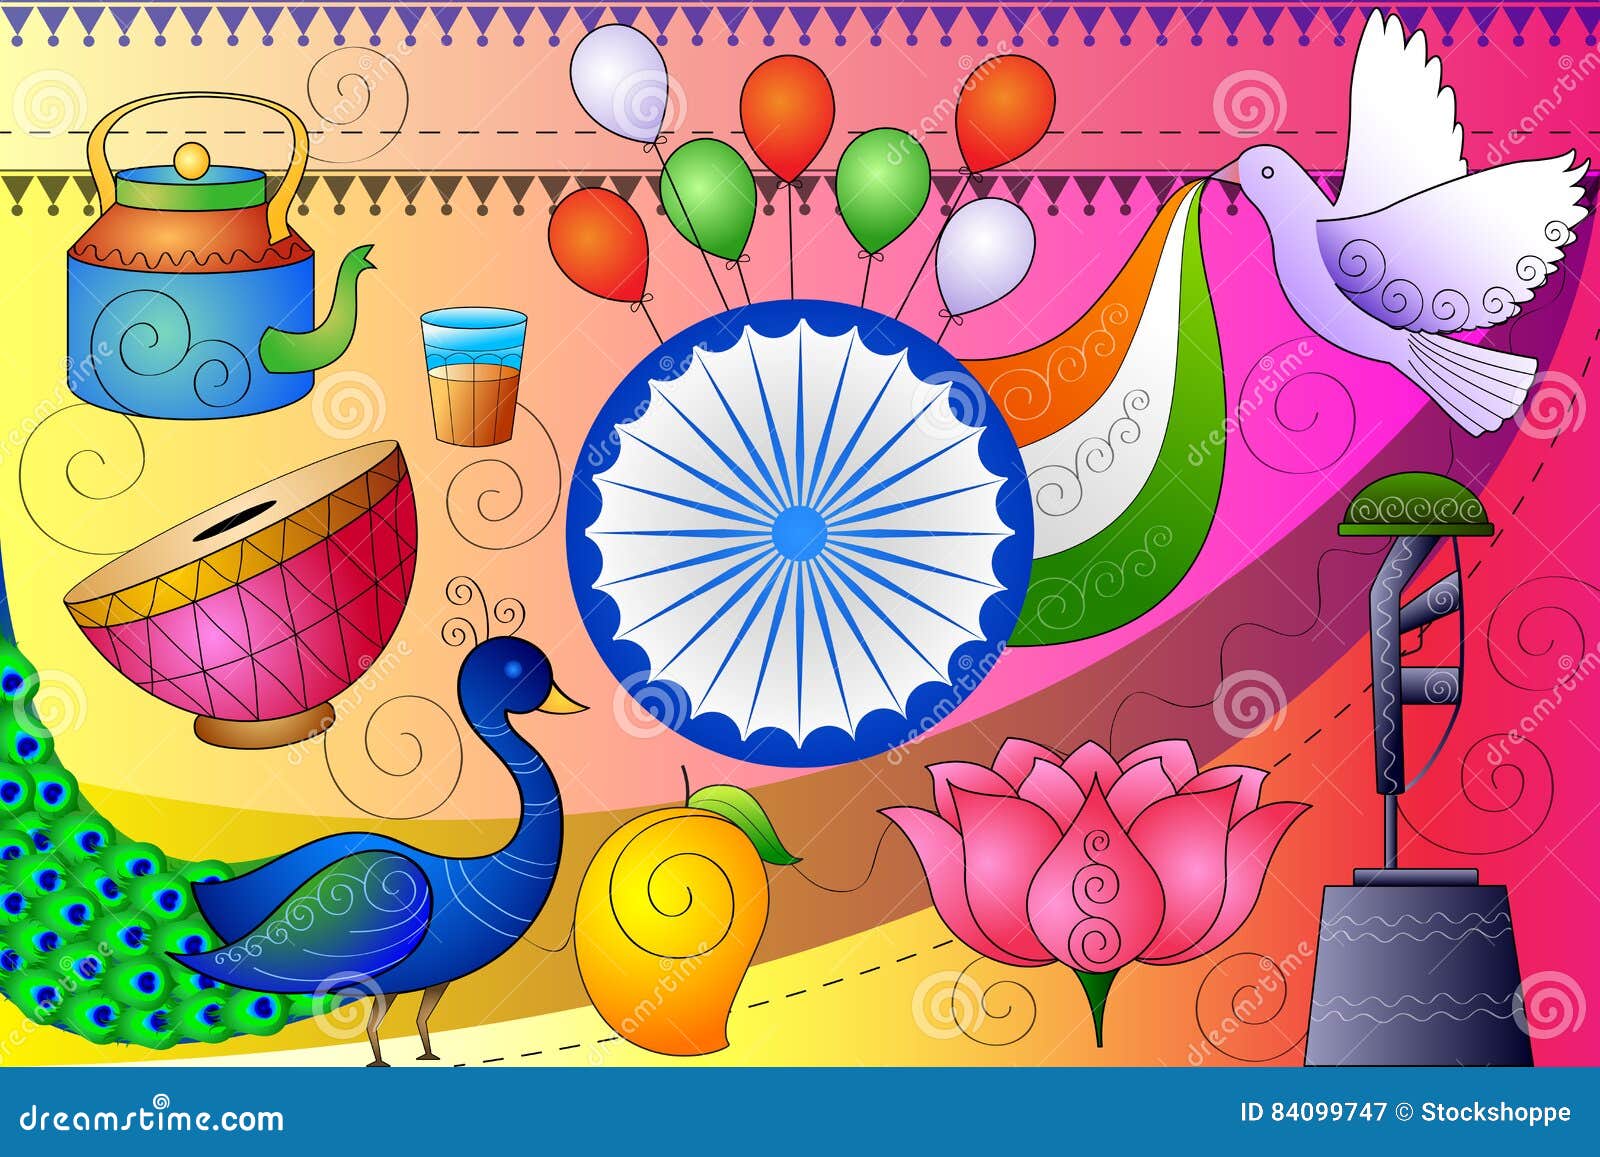 Page 37 | Indian patriotism Vectors & Illustrations for Free Download |  Freepik